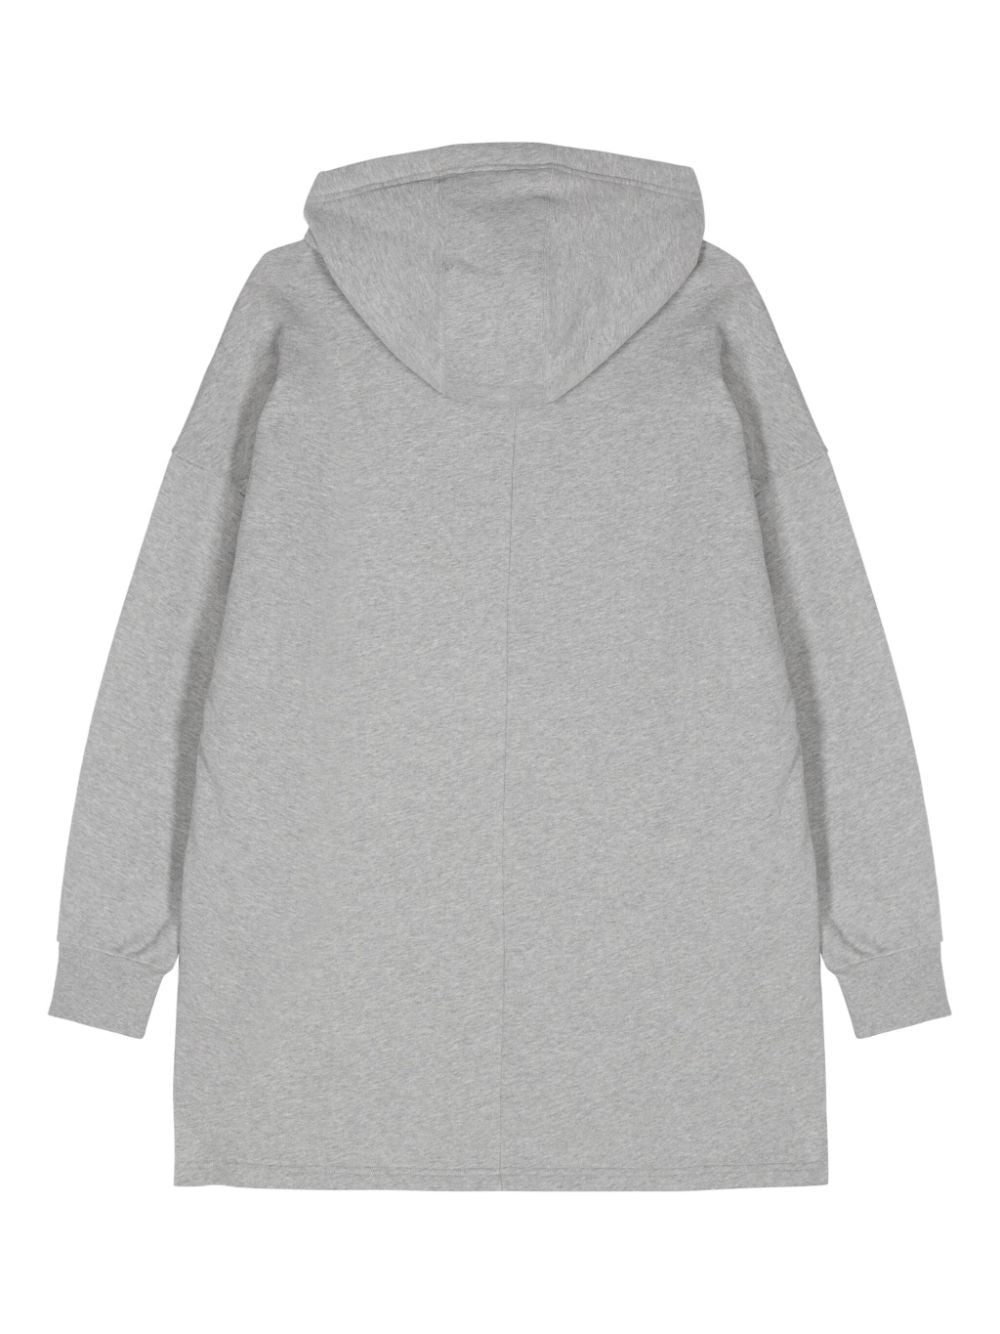 Shanon mélange-effect hoodie<BR/><BR/>